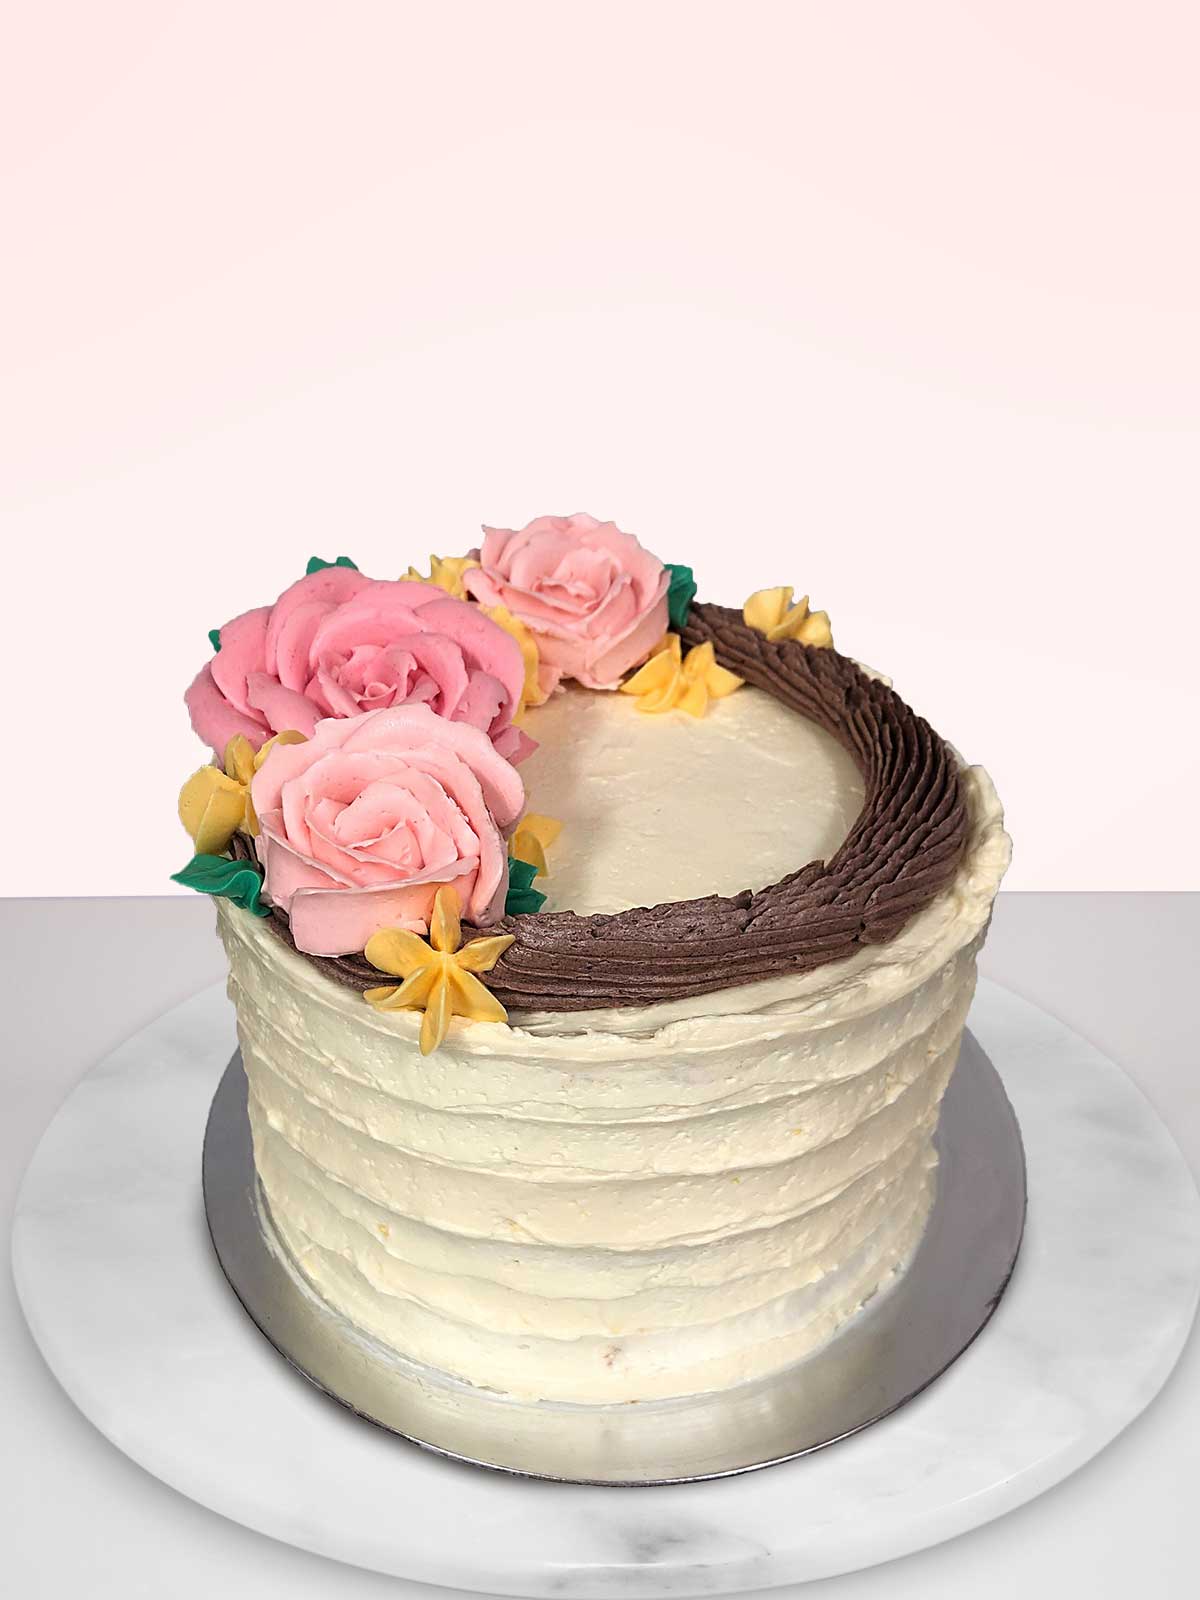 50 Lemon Cake Design (Cake Idea) - October 2019 | Yellow birthday cakes, Themed  cakes, Lemon birthday cakes